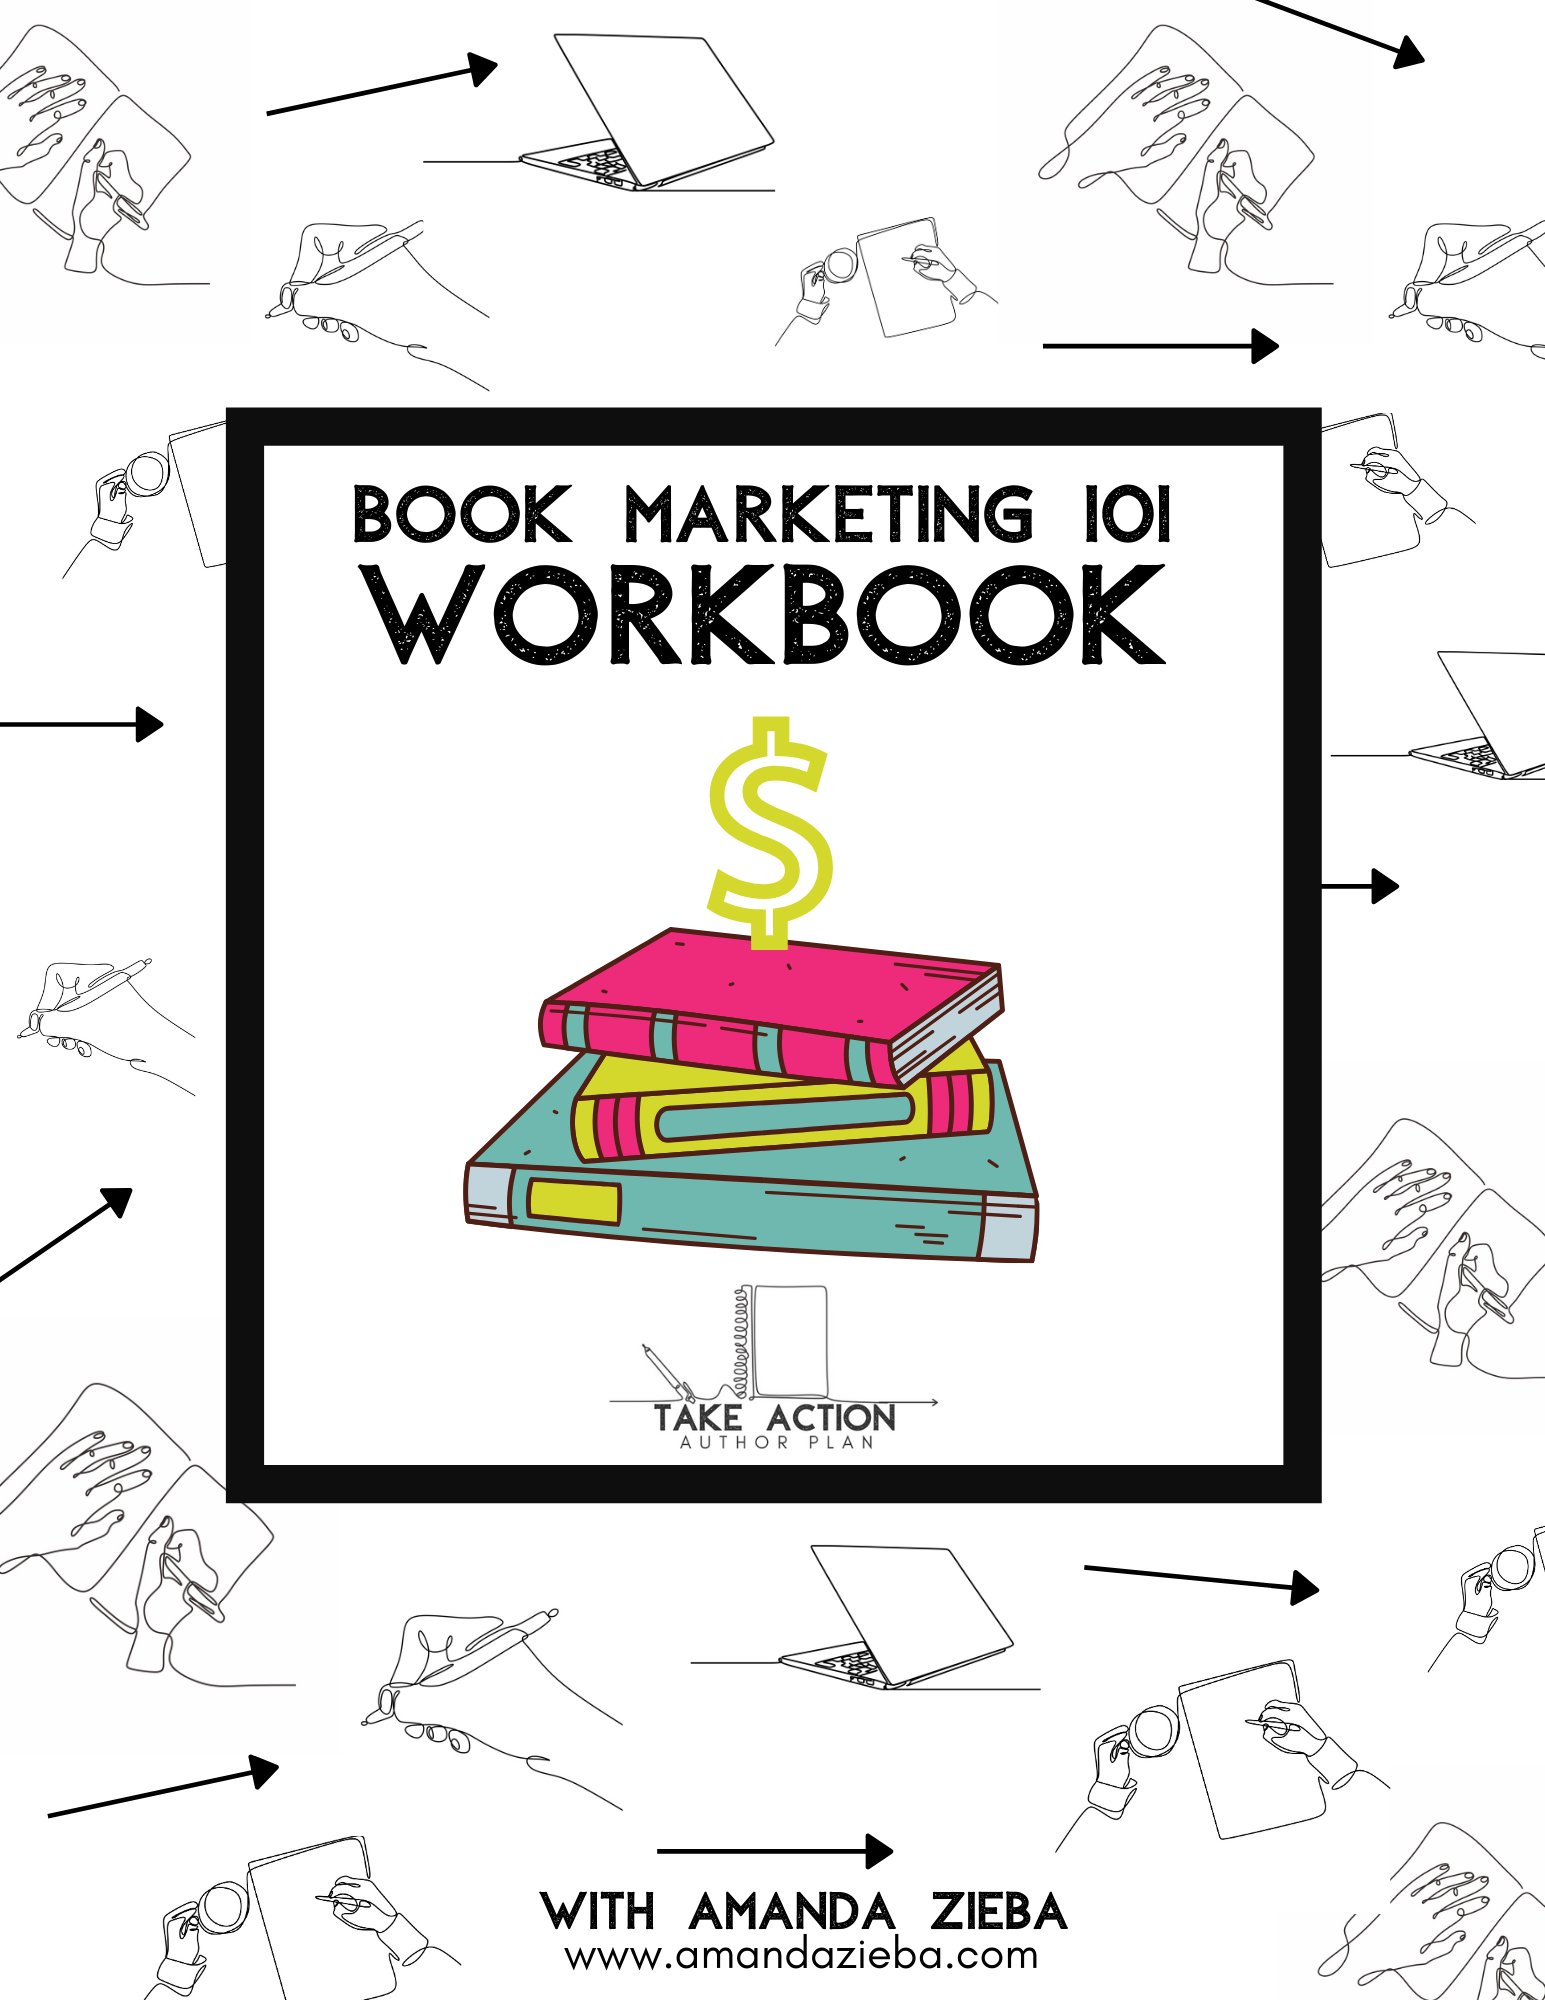 Take Action Author Plan_ Book Marketing 101 Workbook.png